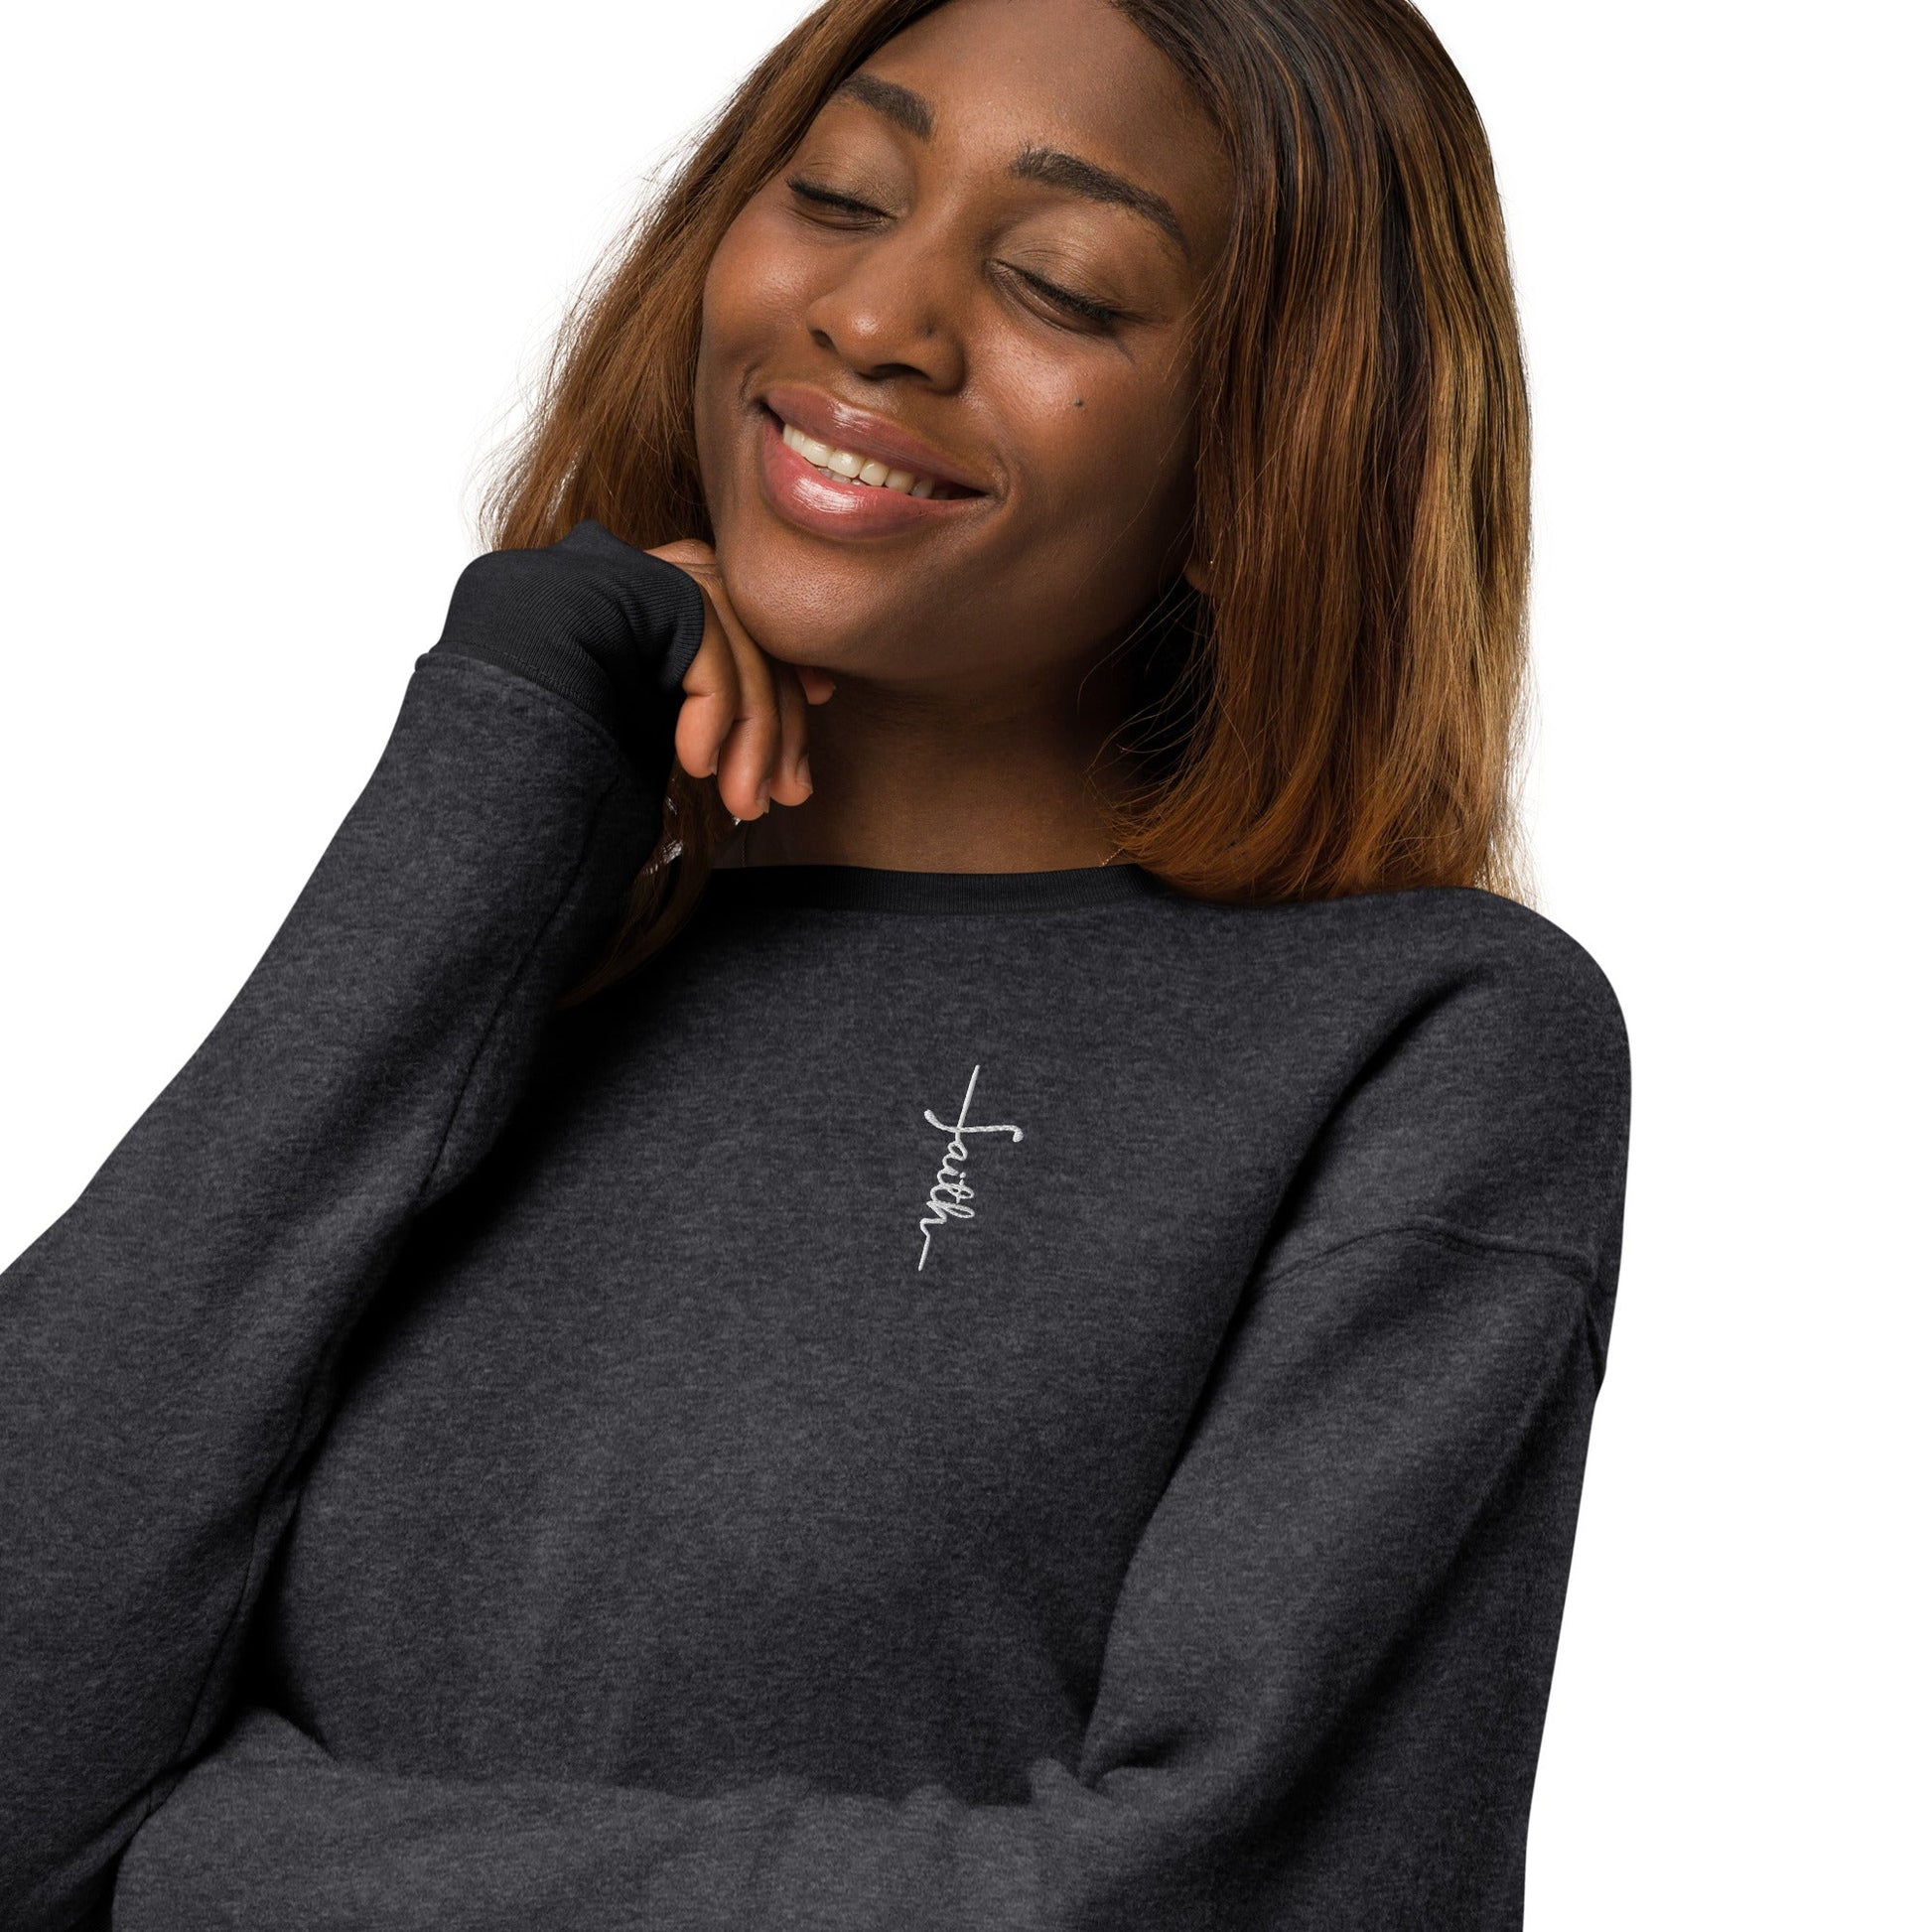 Unisex Fleece Sweatshirt with Embroidered "Faith" Cross - faithbook